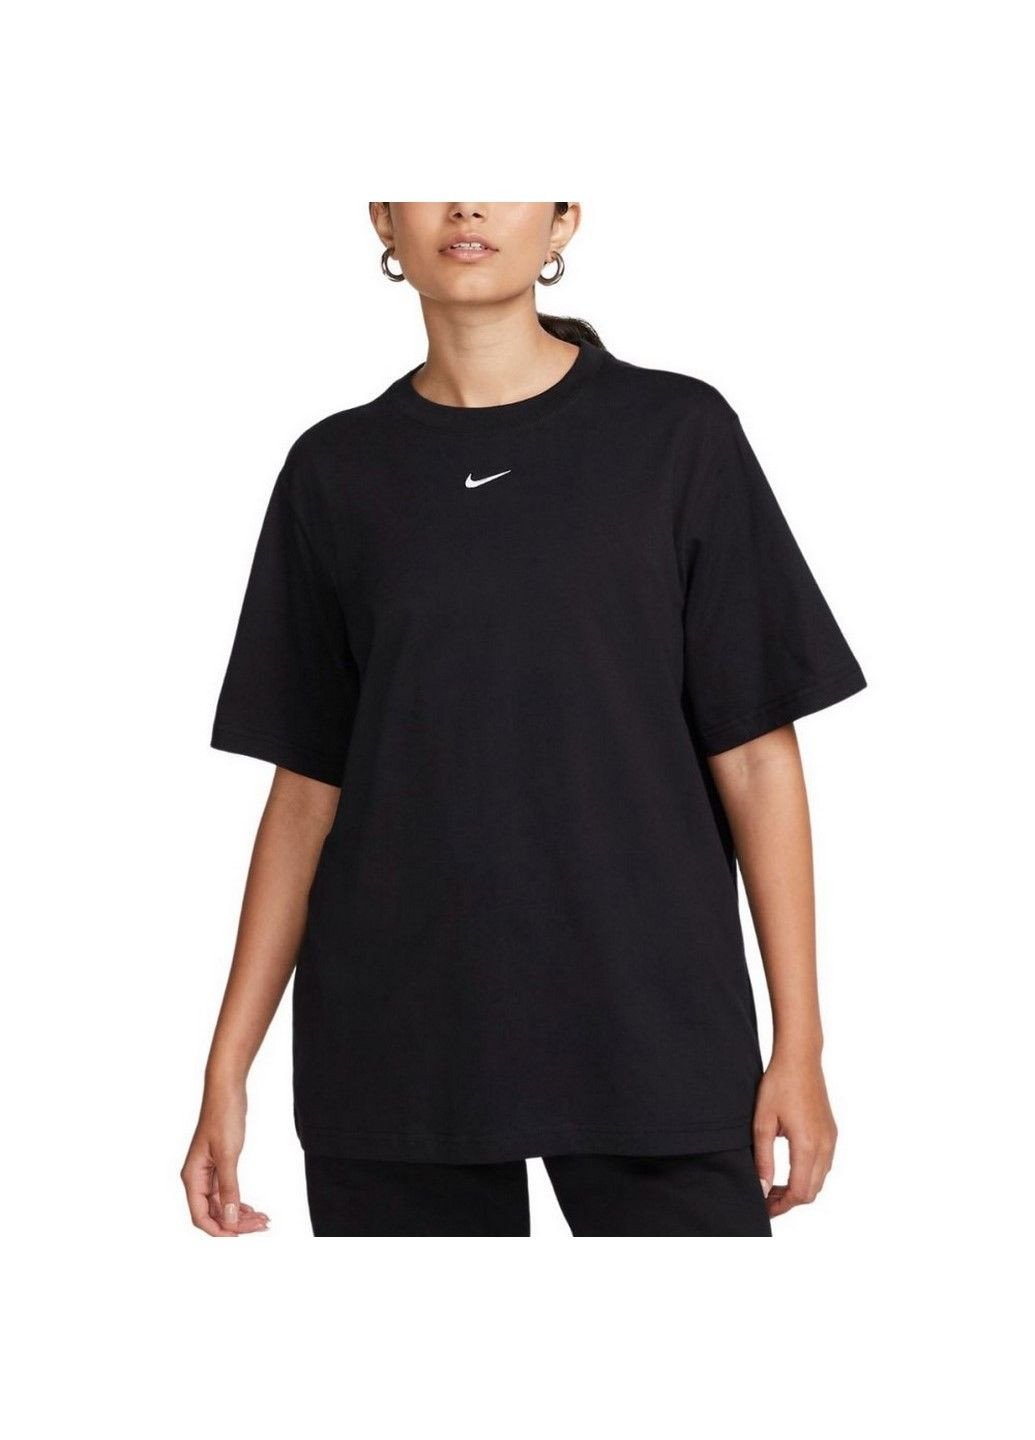 Черная летняя футболка ns tee essntl lbr fd4149-010 Nike